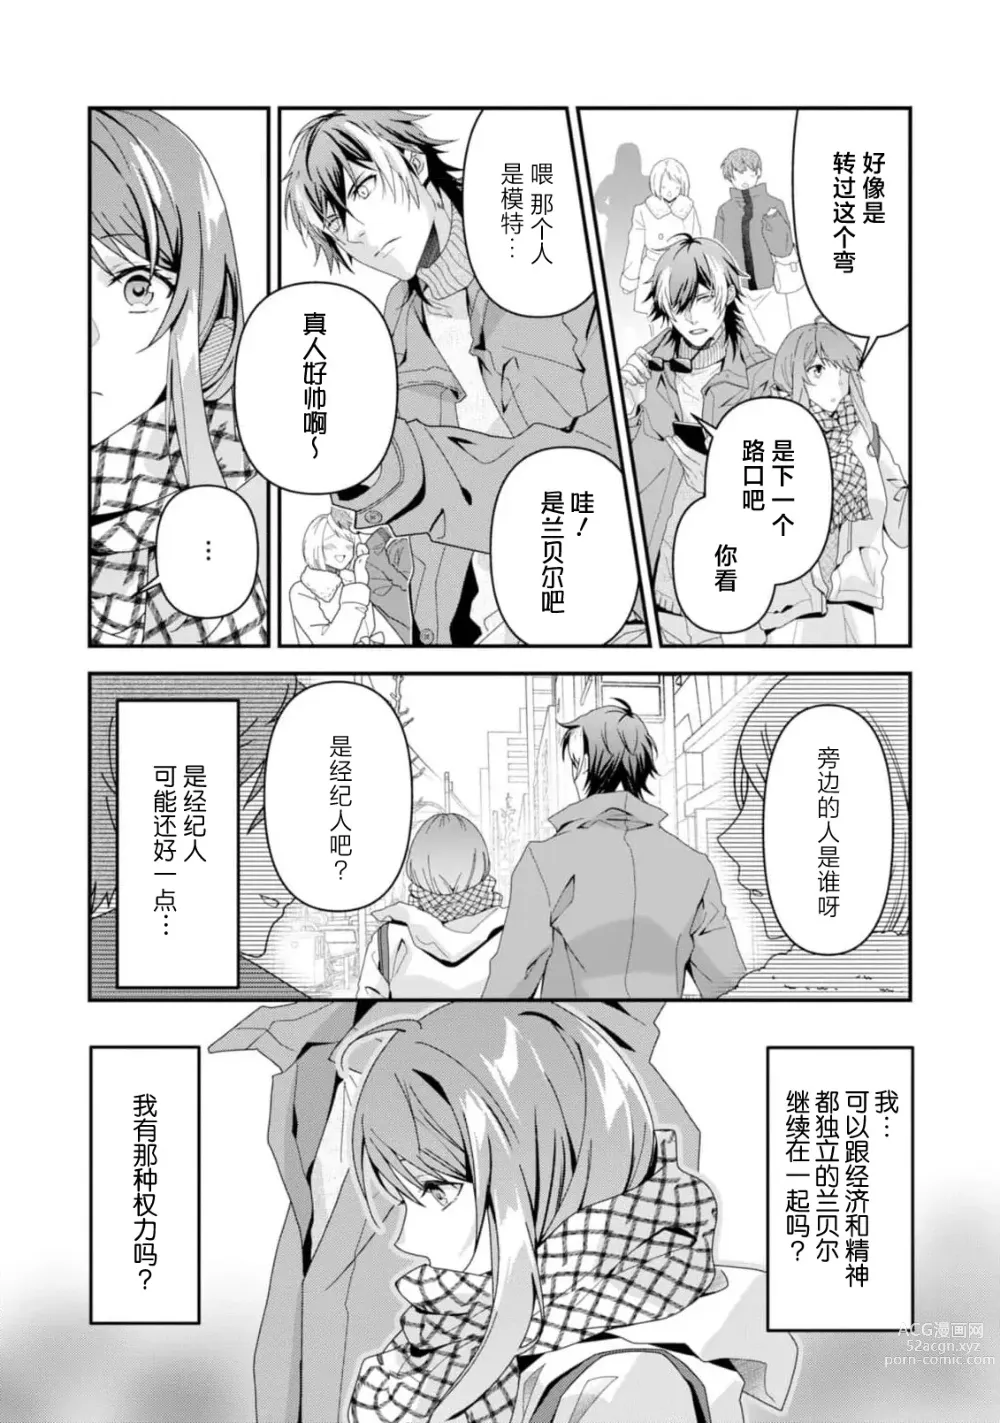 Page 262 of manga 最终BOSS转生而来，因此拿下了他的童贞 1-9 end